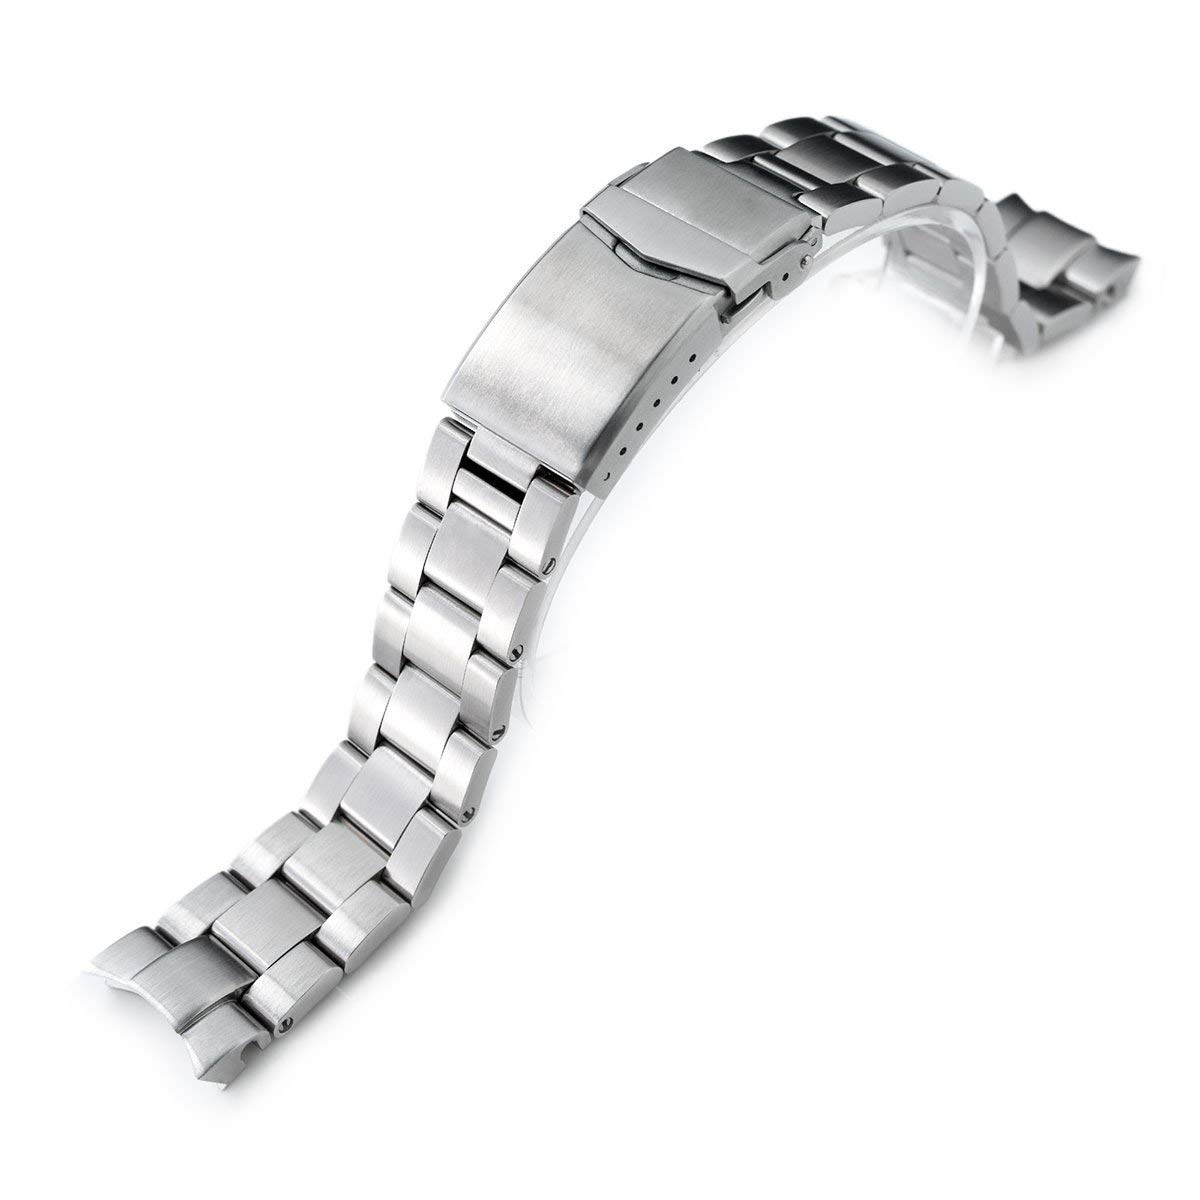 MiLTAT 20mm Metal Watch Band for Seiko Alpinist SARB017, Super-O Screw-Links